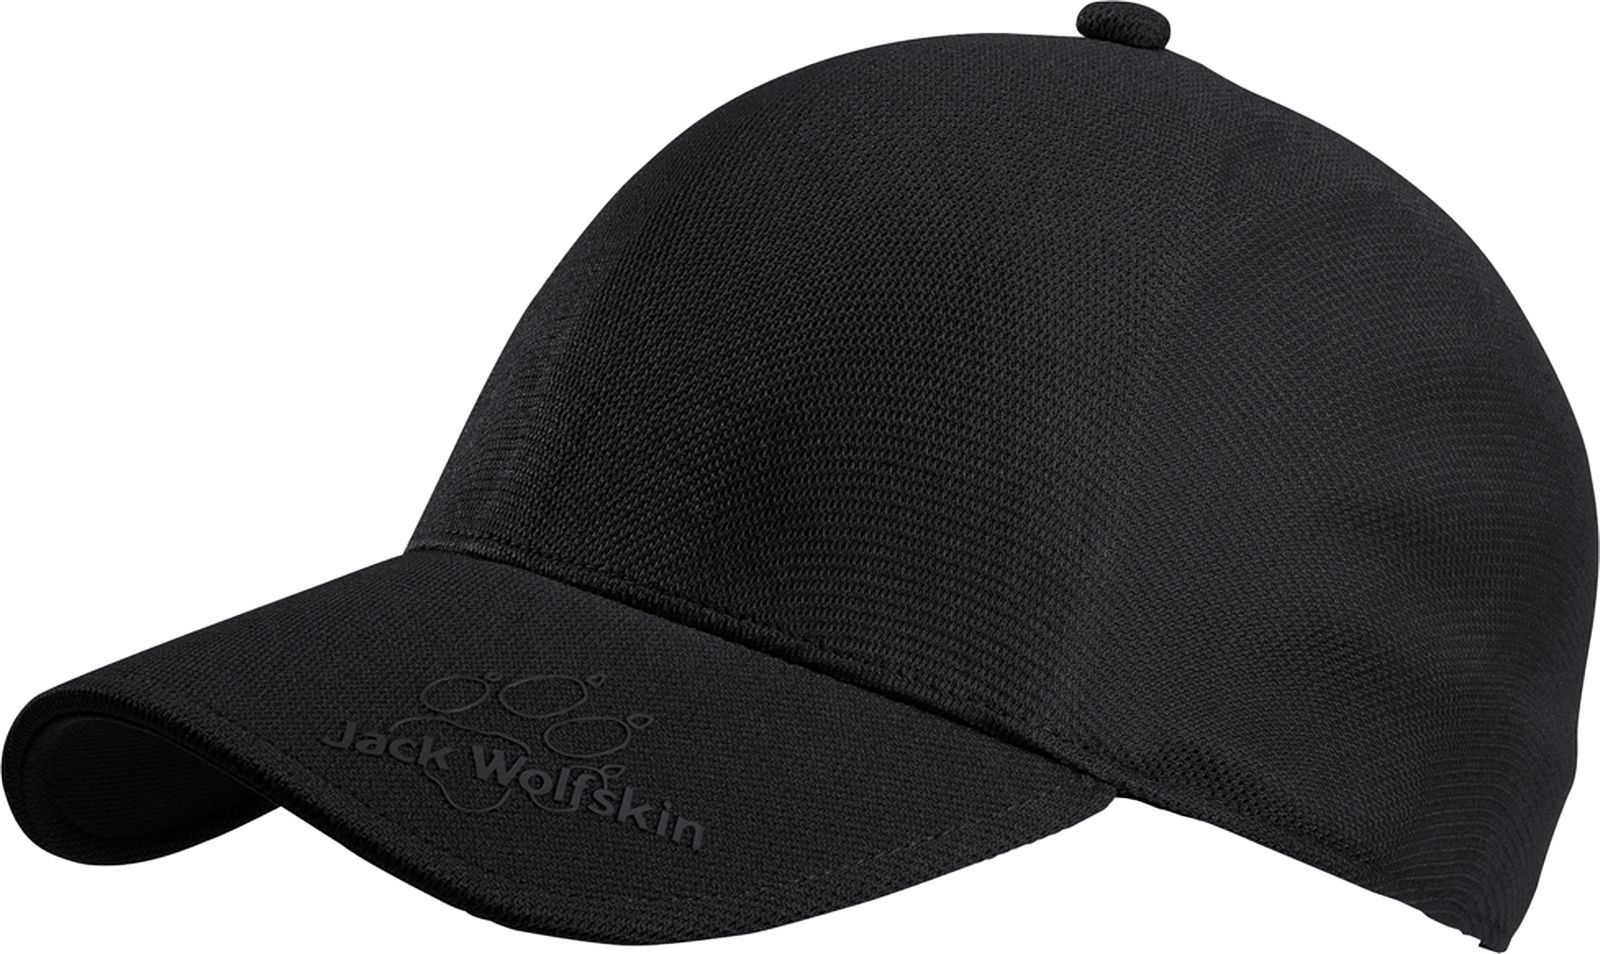  Jack Wolfskin Seamless Active Cap, : . 1907571-6000.  M (54/57)